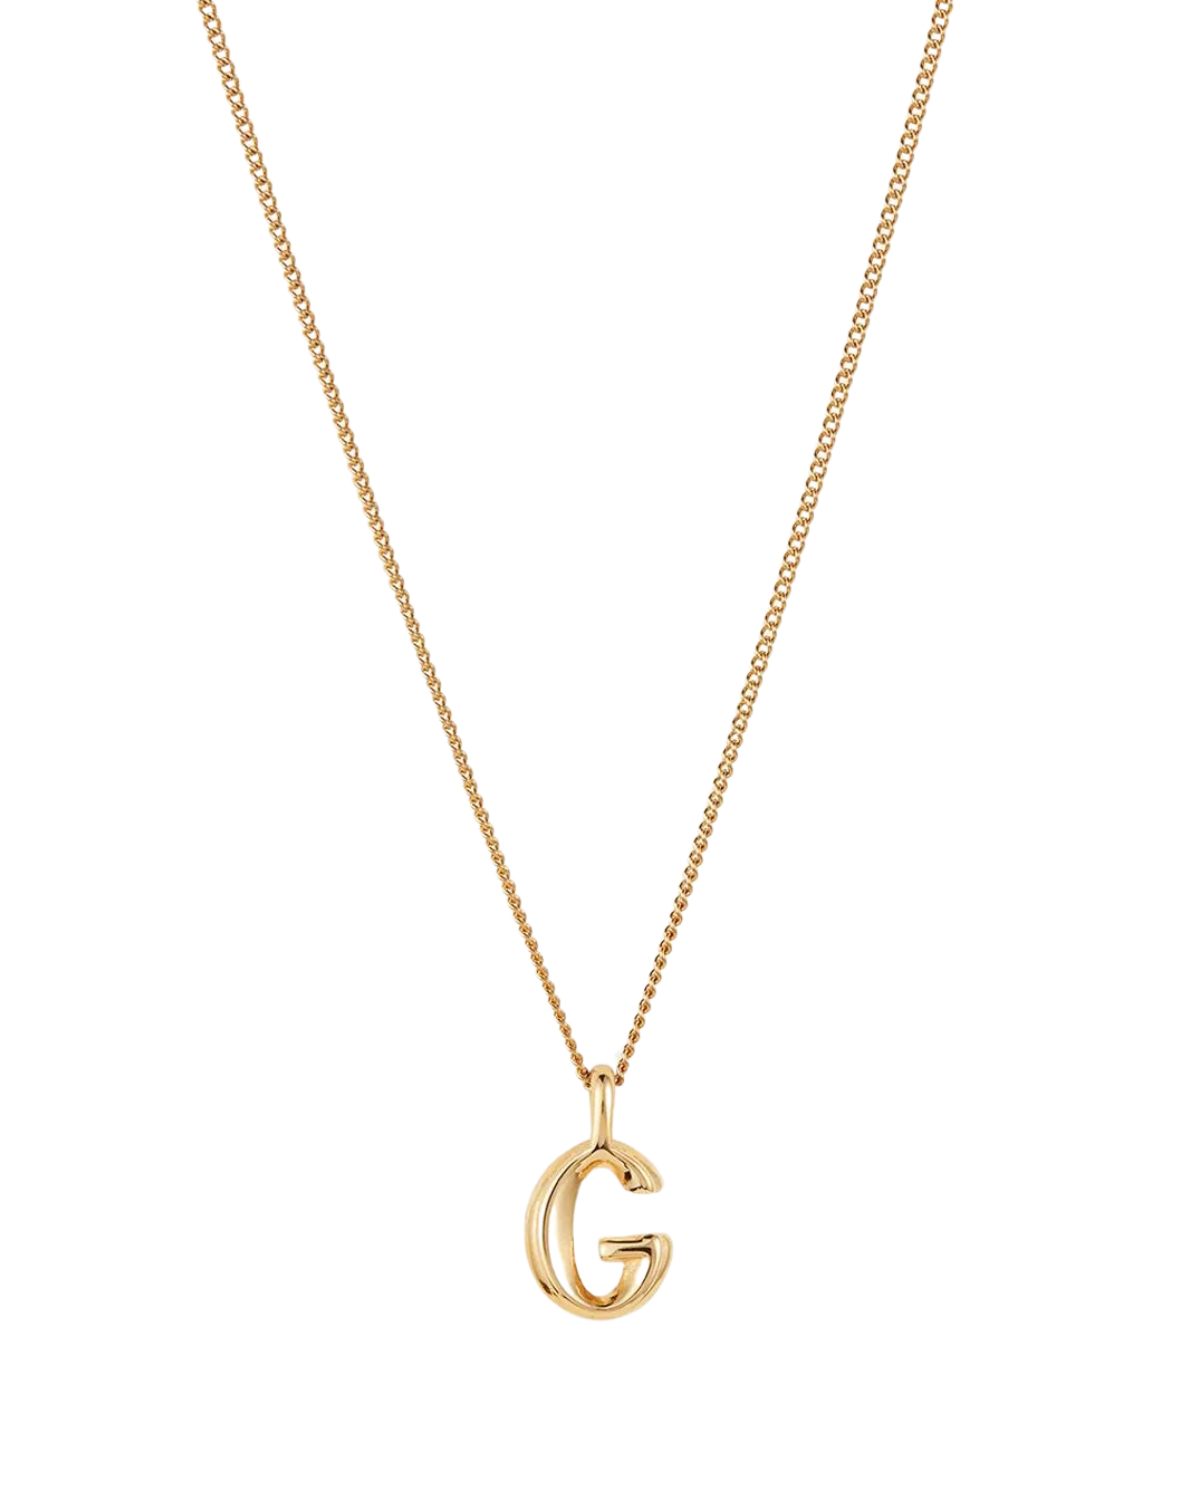 Monogram Necklace - G (Gold)